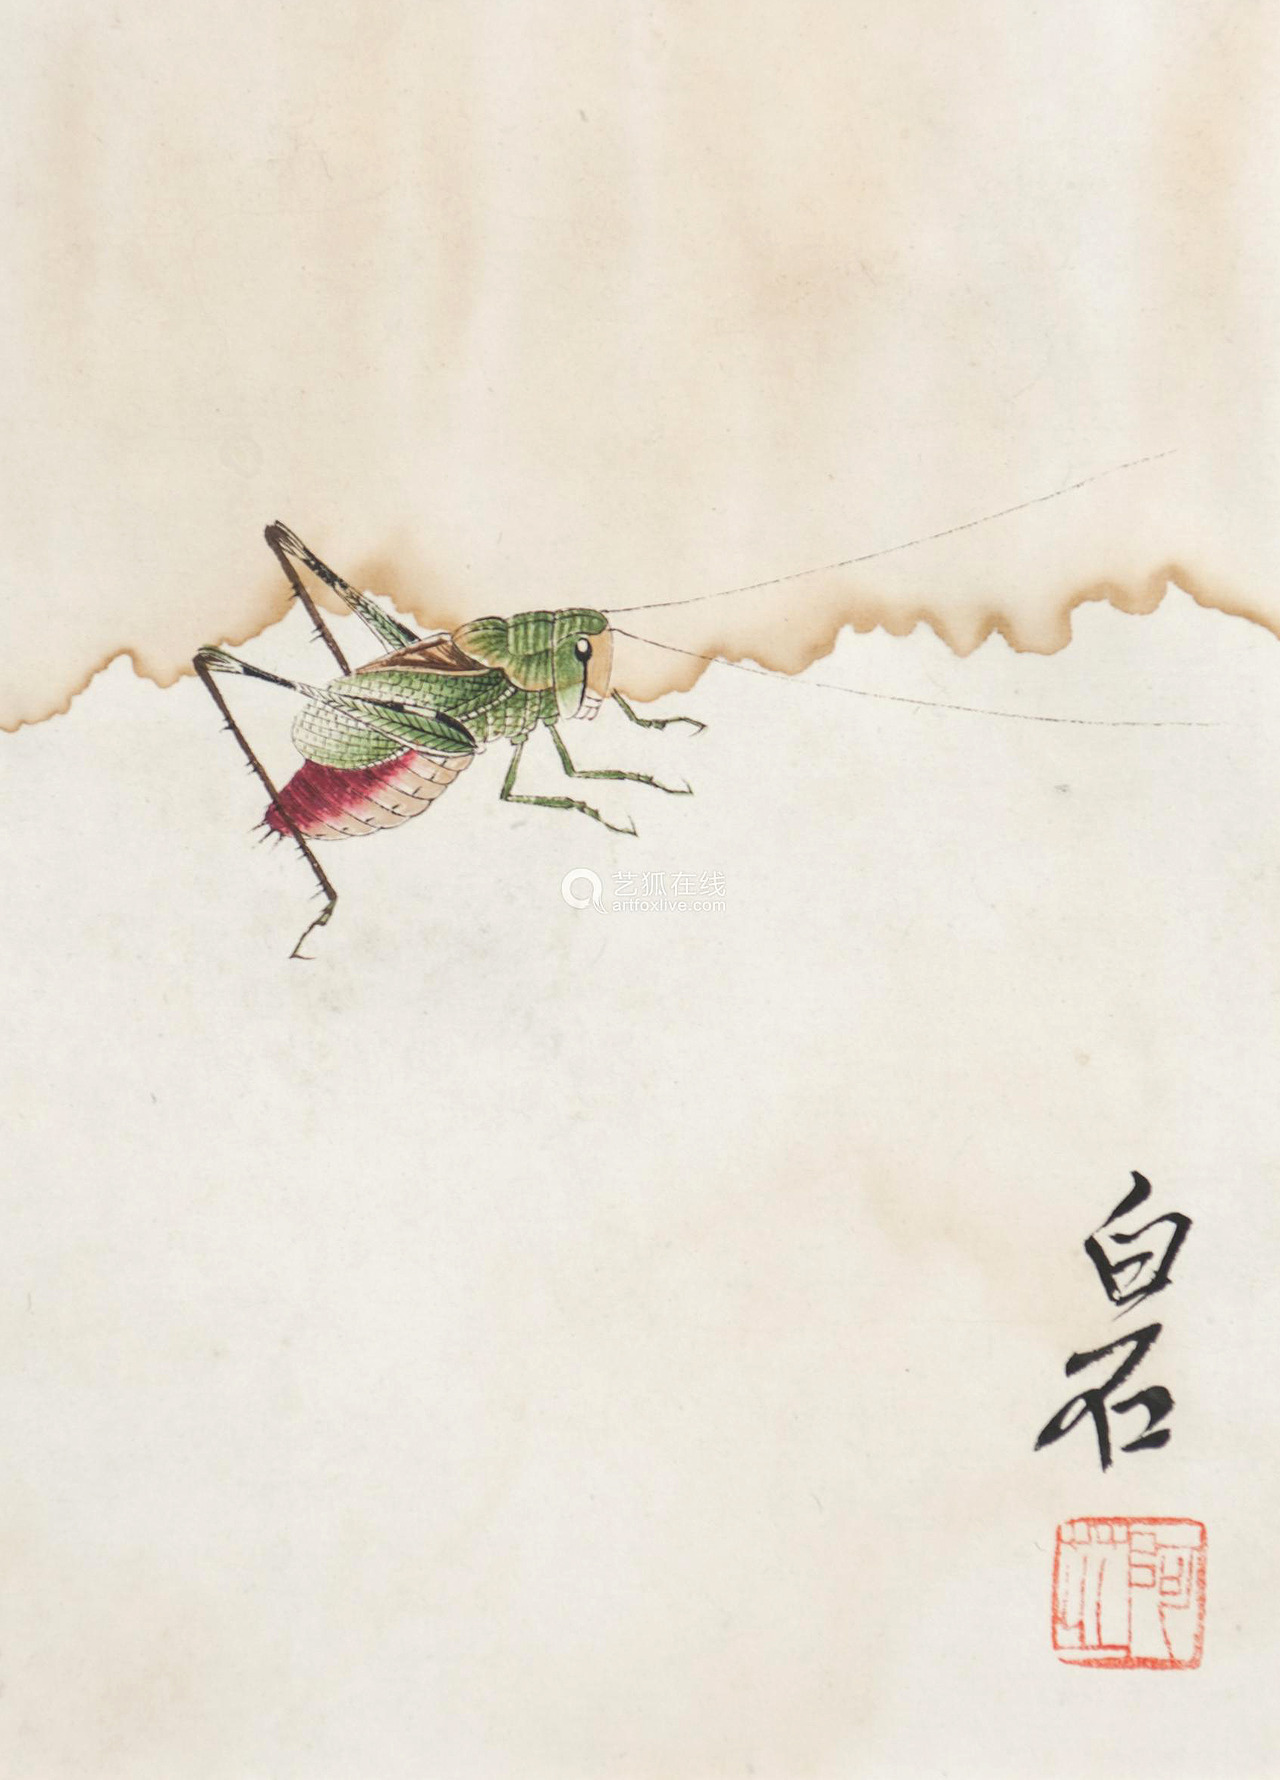 retroavangarda:
â€œ Qi Baishi (1864-1957) â€“ Grasshopper
â€